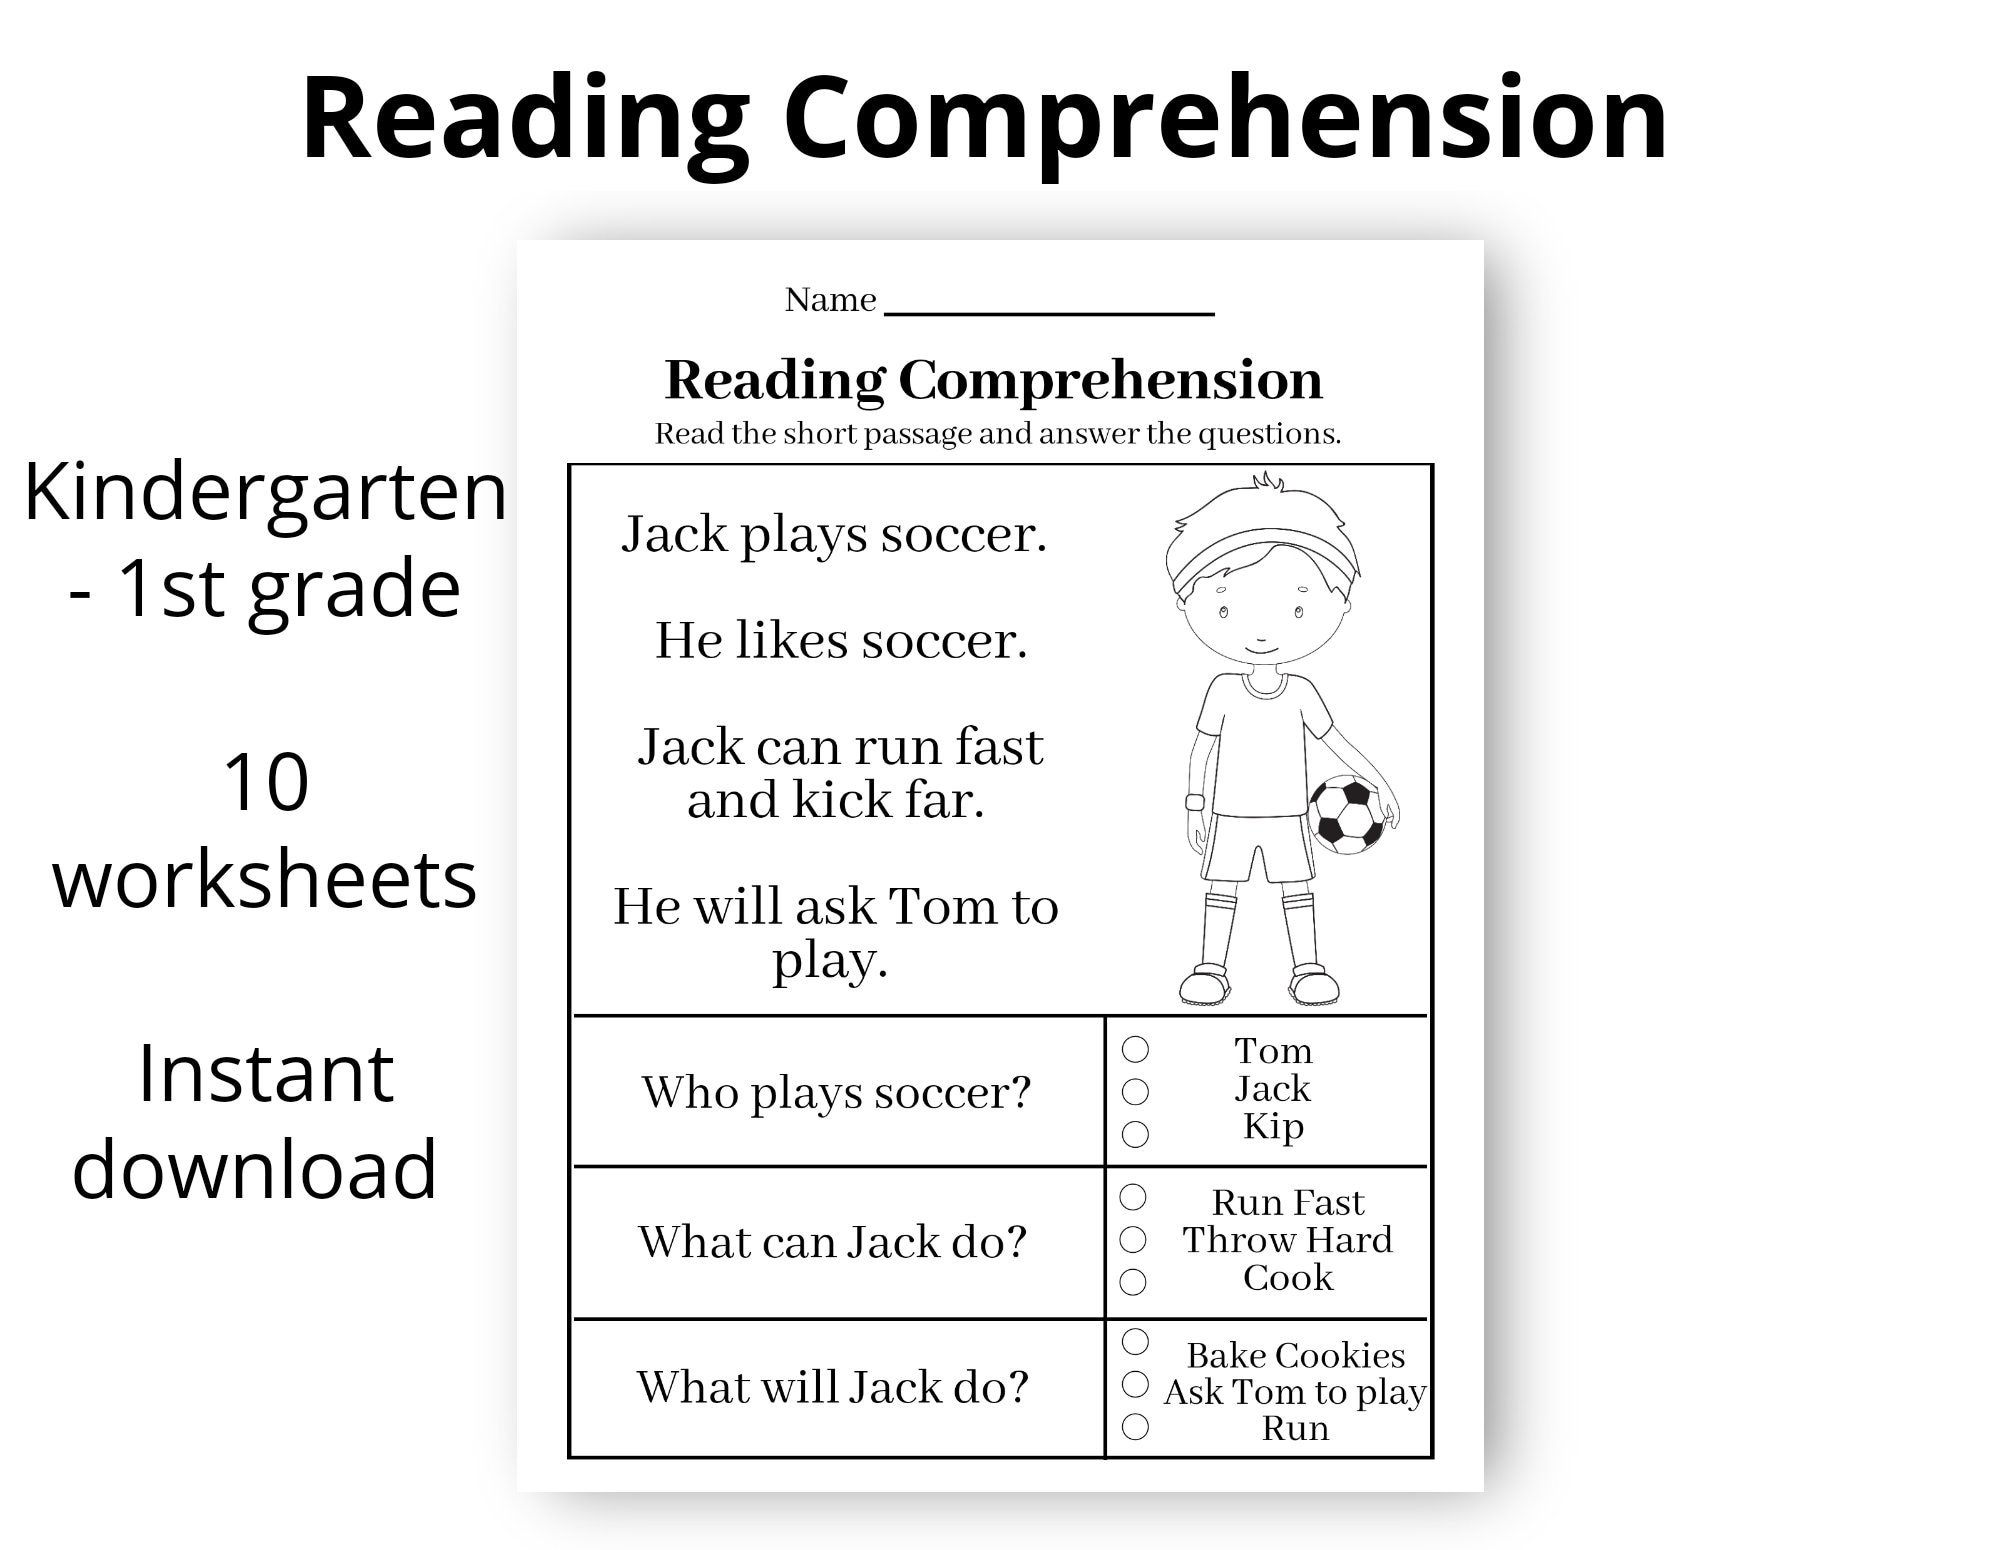 Reading Comprehension Printable Worksheet First Grade Kindergarten Instant Download Homeschool Teacher Kids Distance Etsy